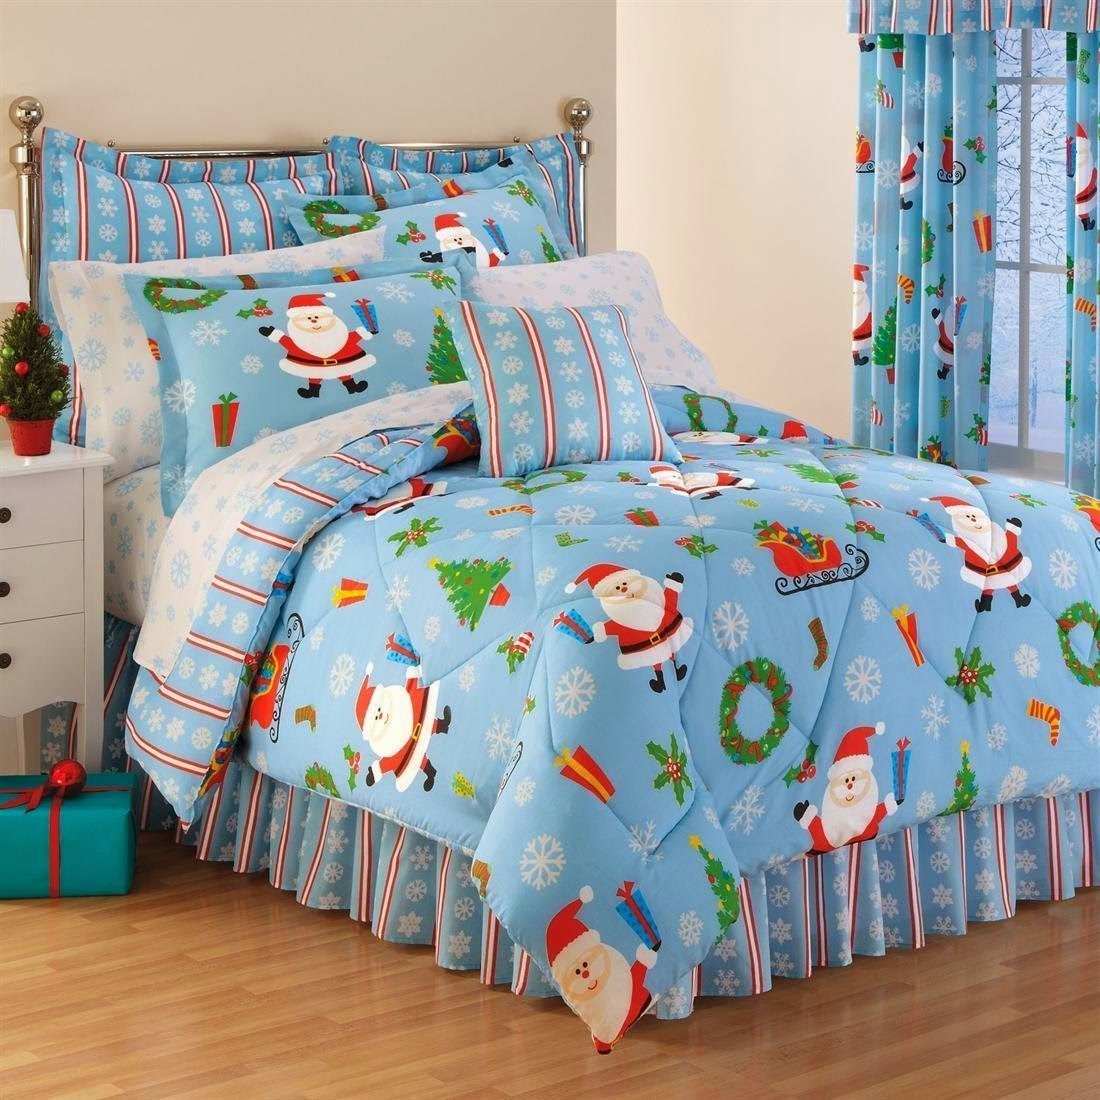 christmas-bedroom-decorating-ideas-27